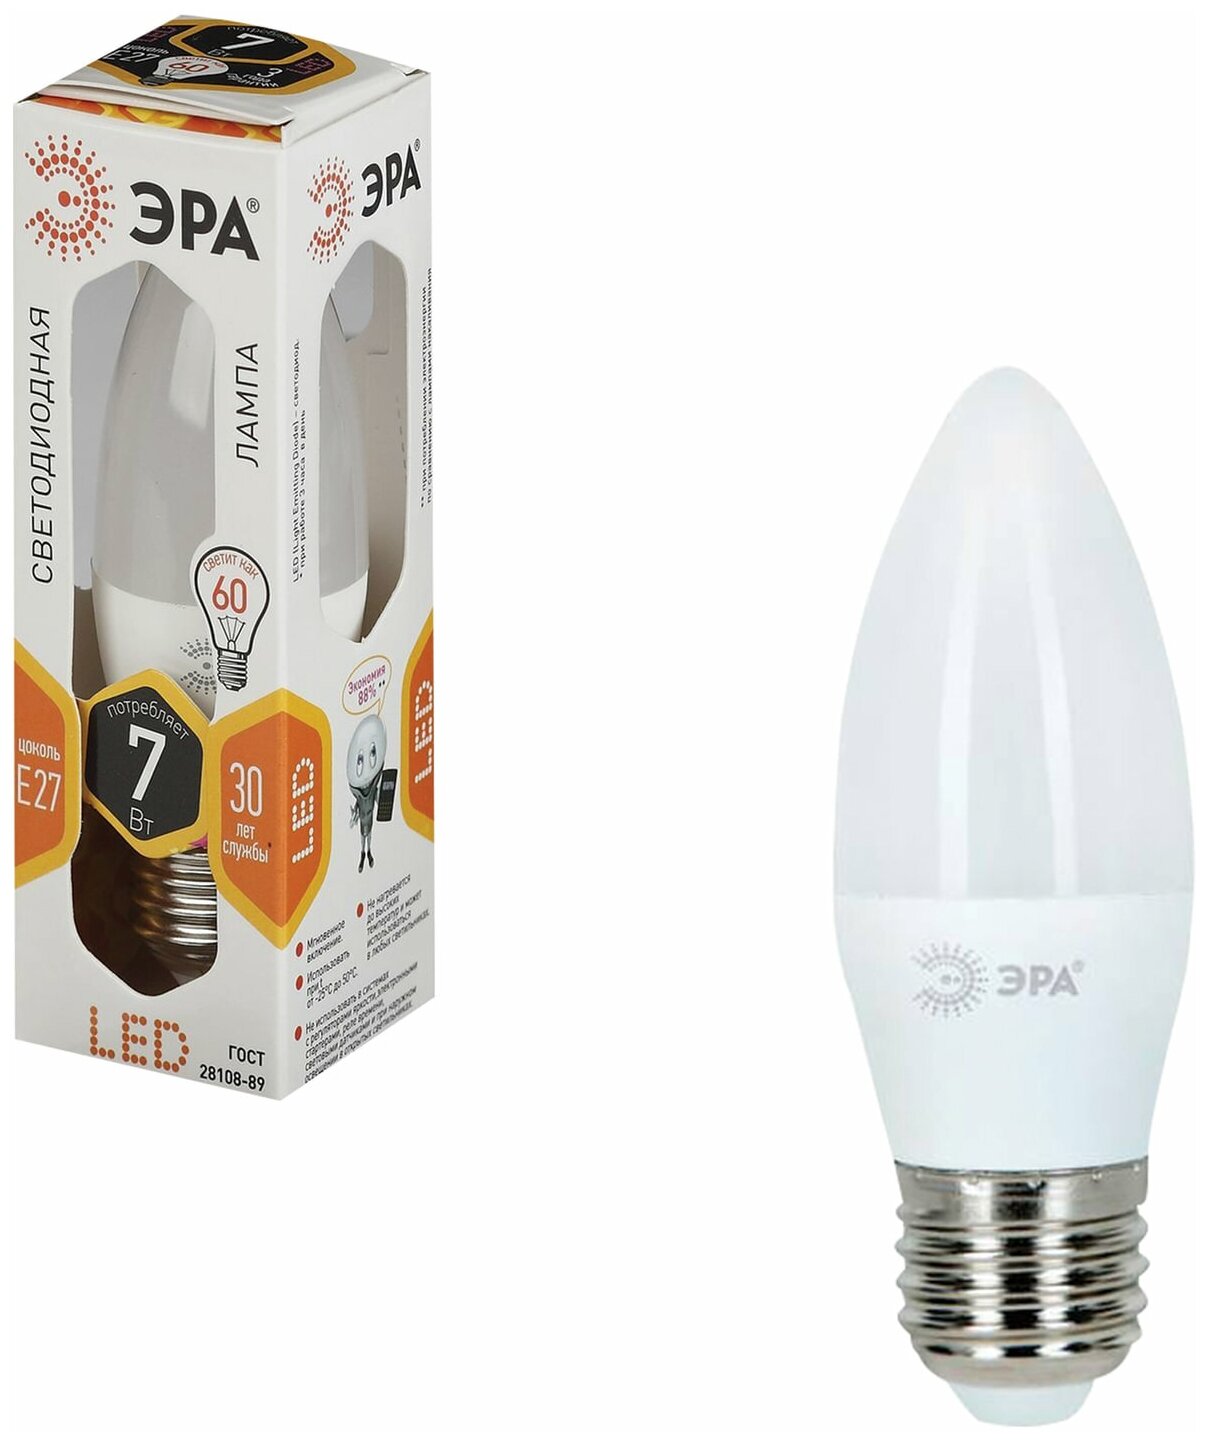 Лампа светодиодная ЭРА 7 (60) Вт цоколь E27 «свеча» теплый белый свет 30000 ч LED smdB35-7w-827-E27